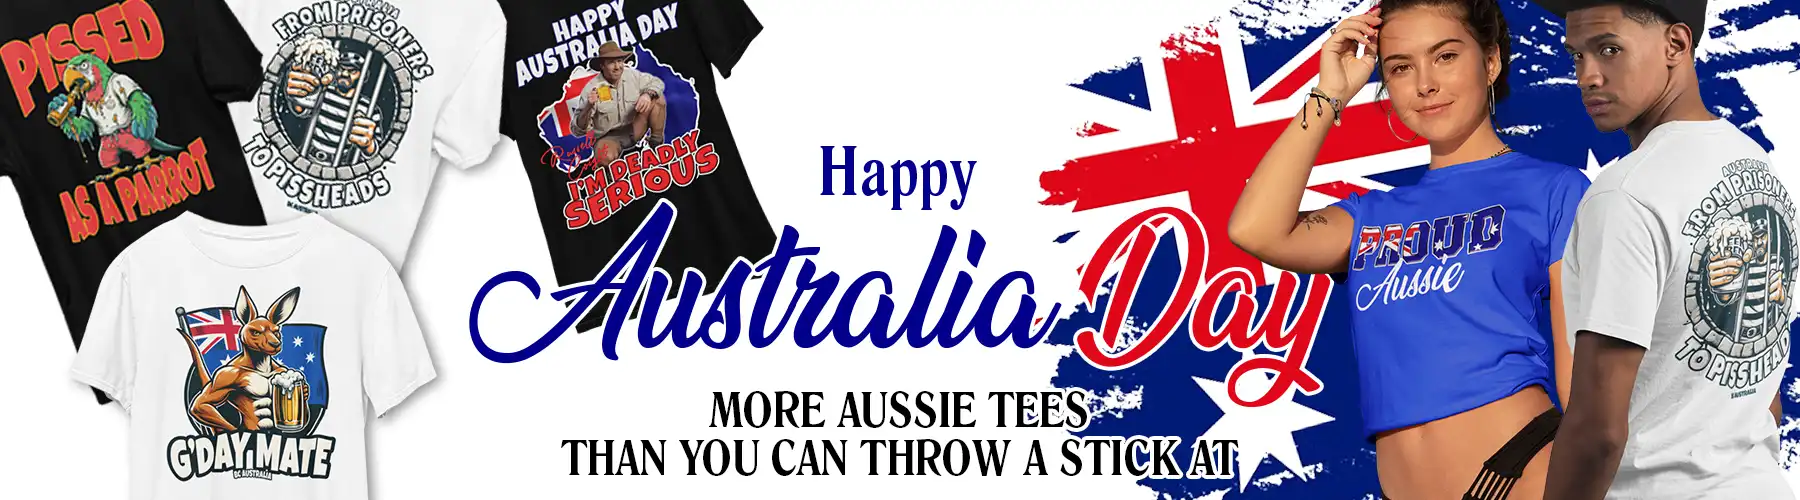 Australia Day T-Shirts | Aussie T-Shirts Australia | Funny Aussie T-Shirts | Aussie Graphic Tees | Aussie Pride T-Shirts | Australia Day T-Shirts | Australia Day Shirts